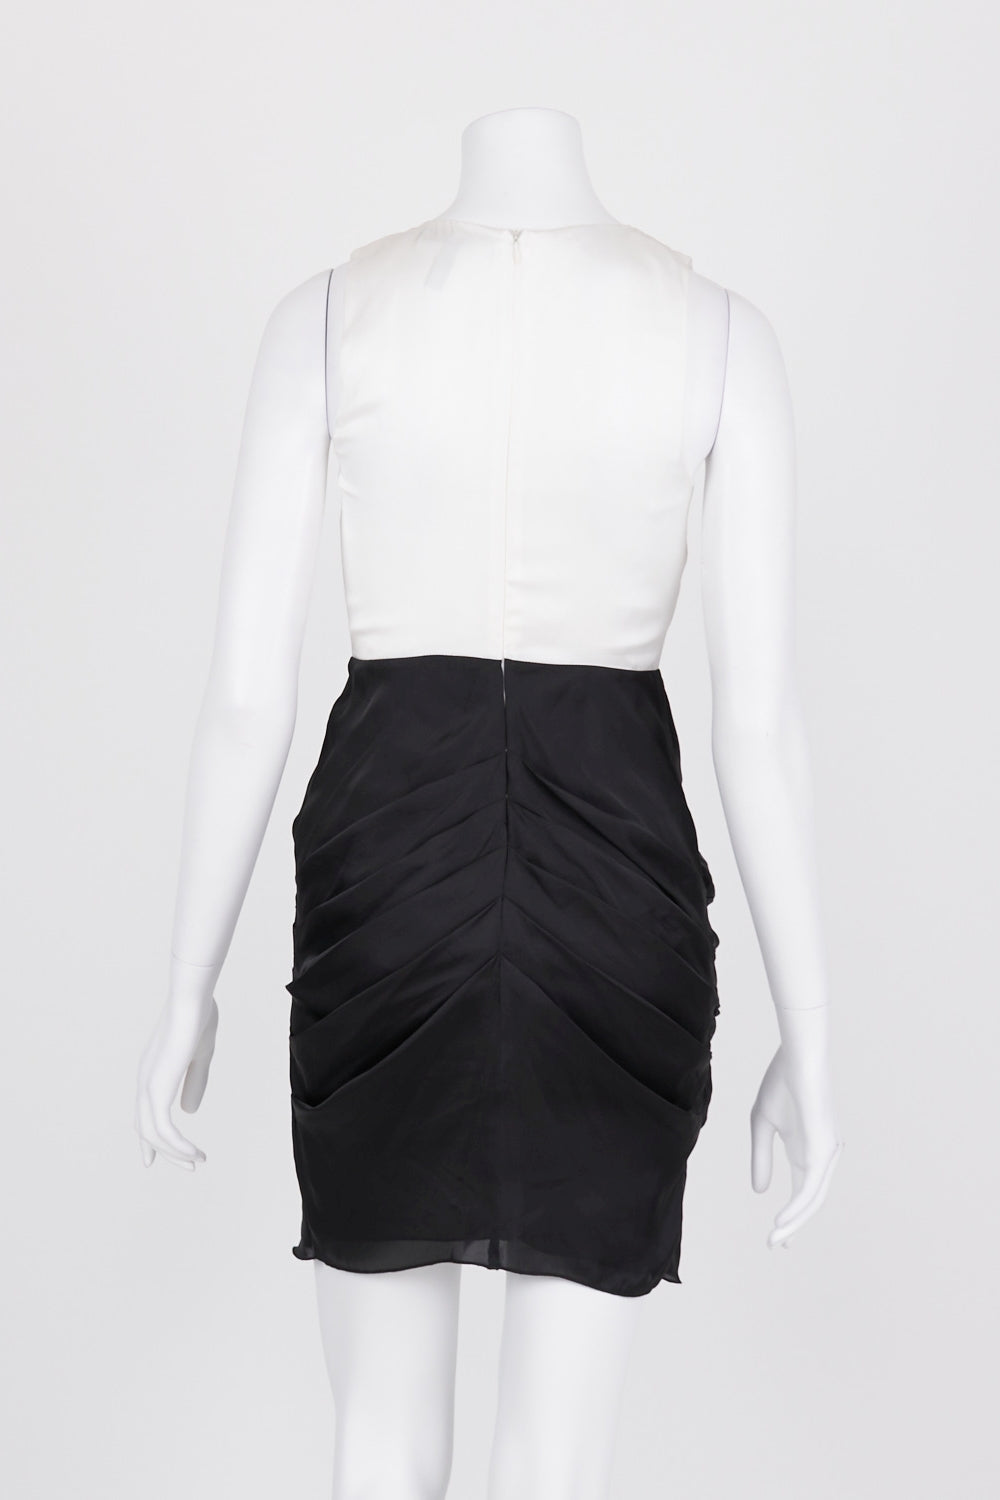 BCBGMAXAZRIA Black And White Ruched Side Silk Dress S